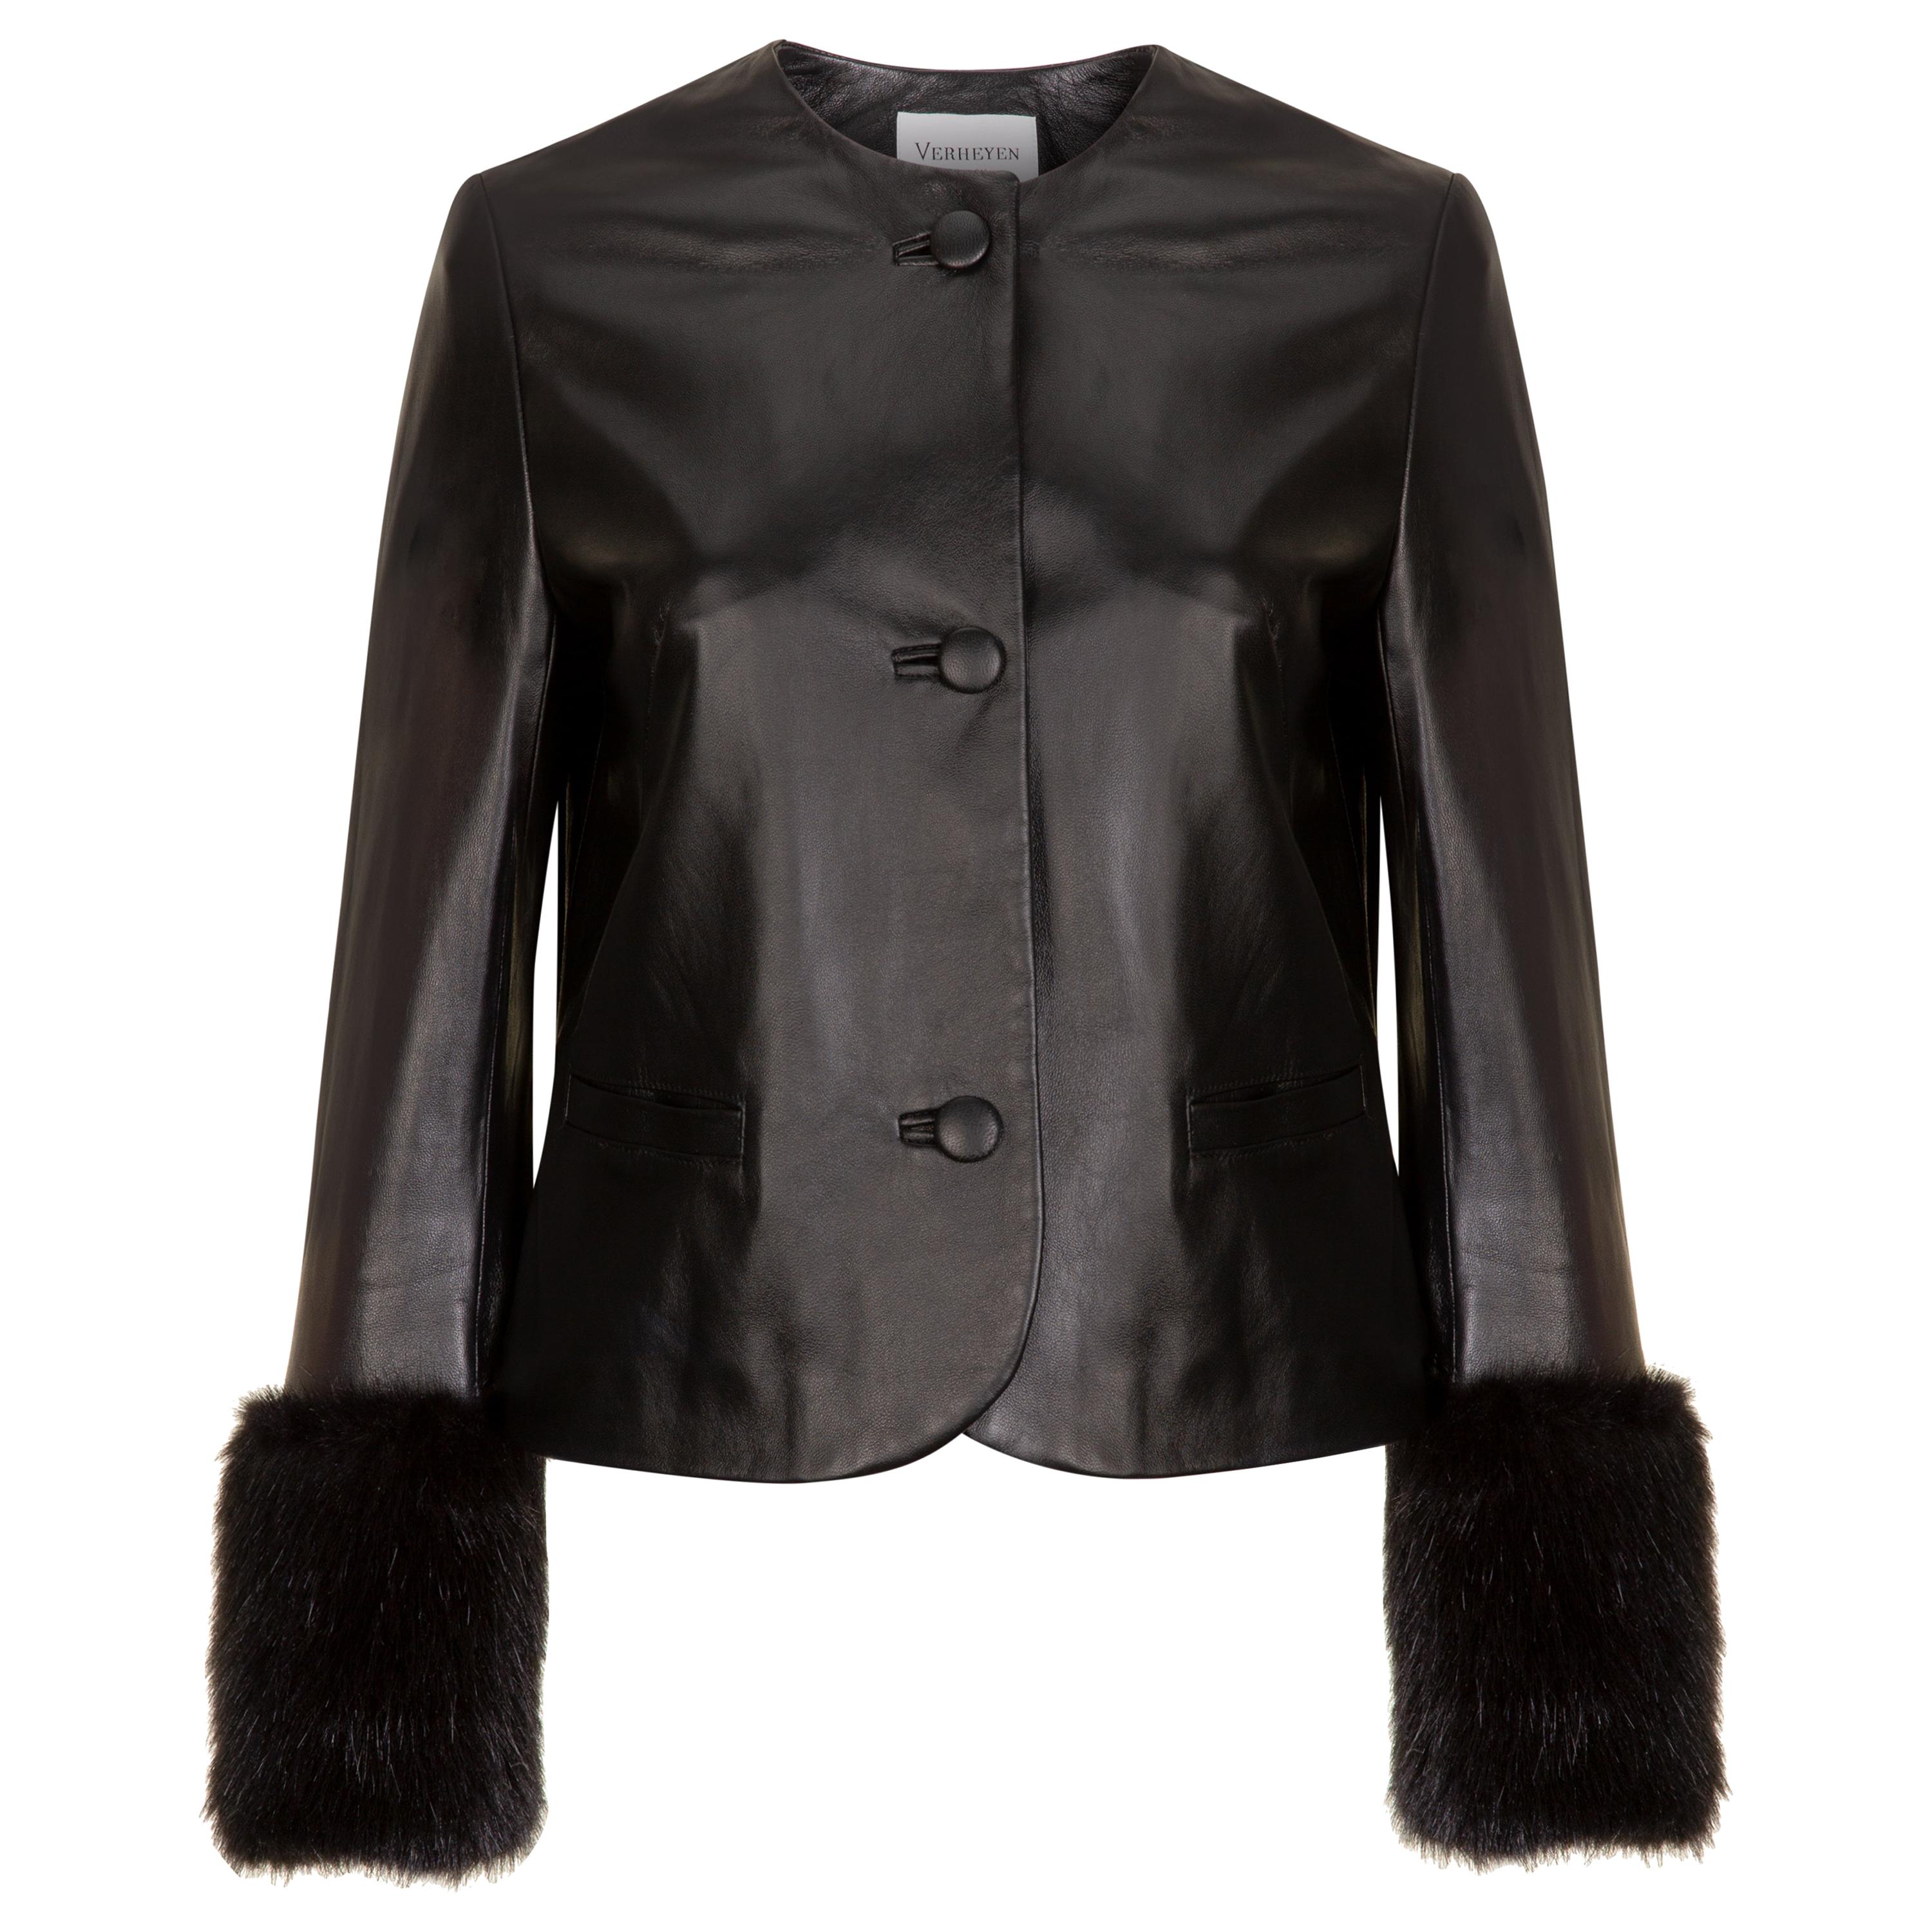 Verheyen Vita Cropped Jacket in Black Leather with Faux Fur - Size uk 6